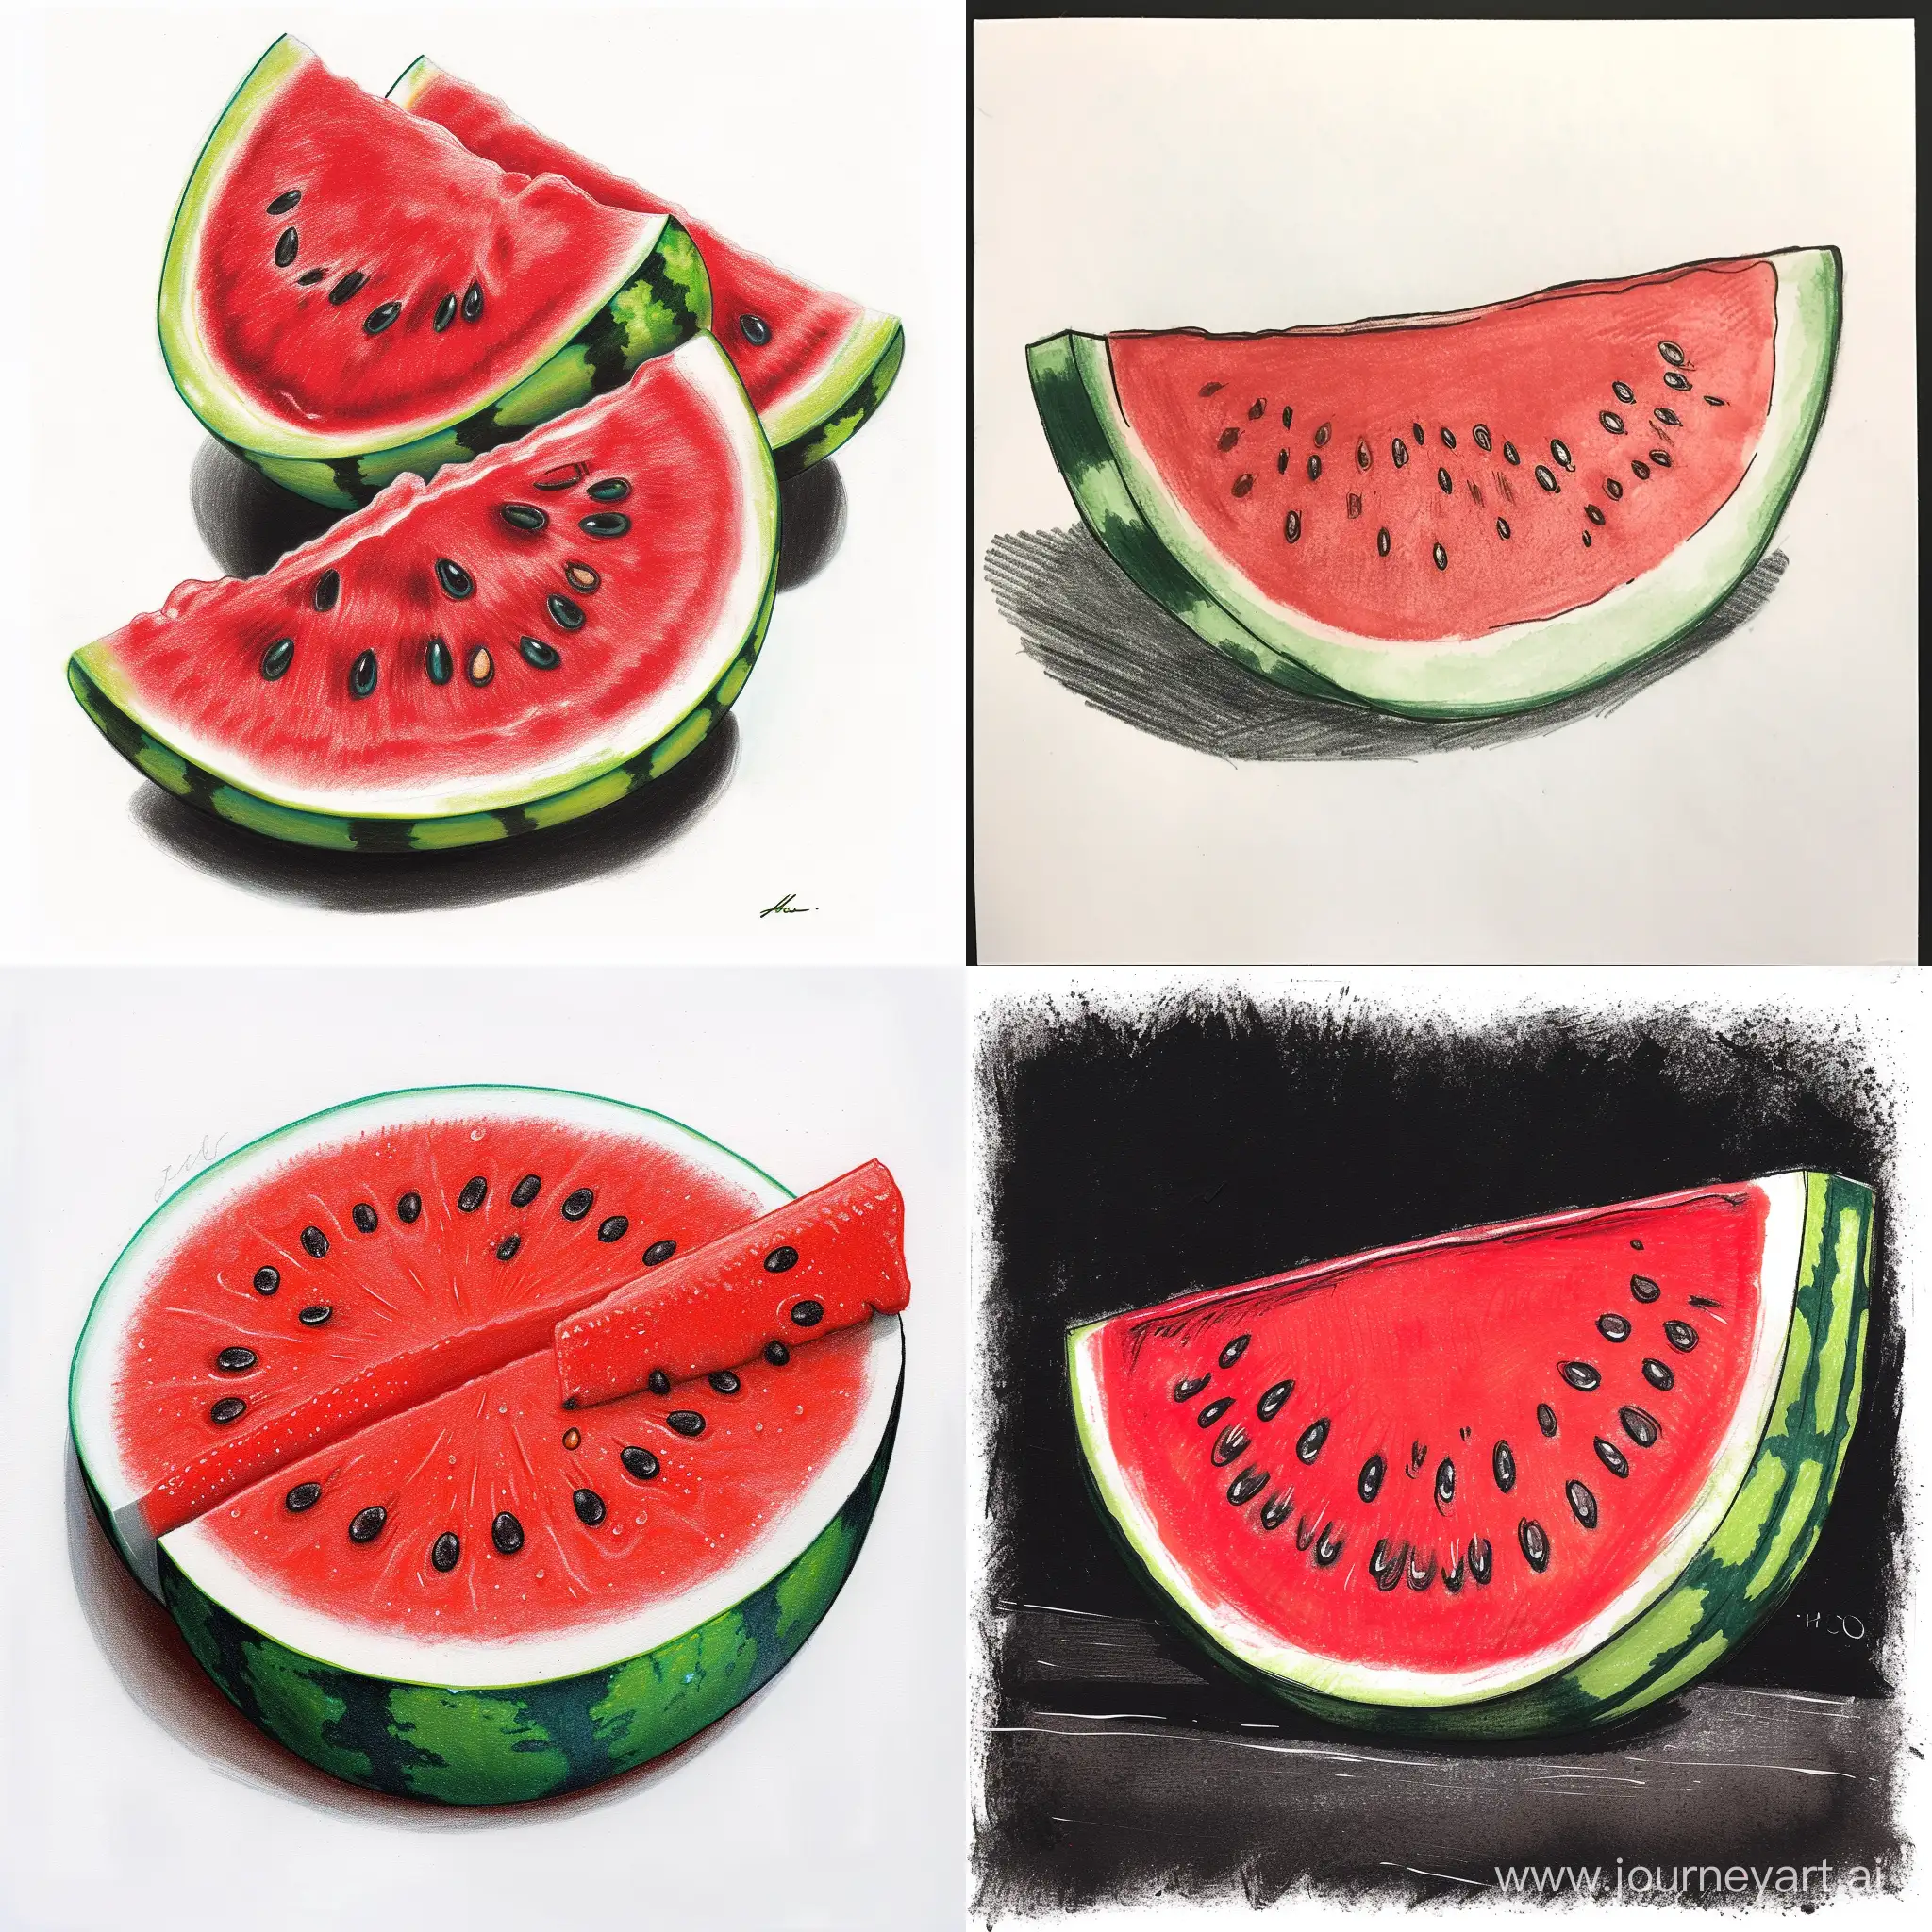 Seductive-Watermelon-Art-with-Vivid-Colors-Sensual-Fruit-Illustration